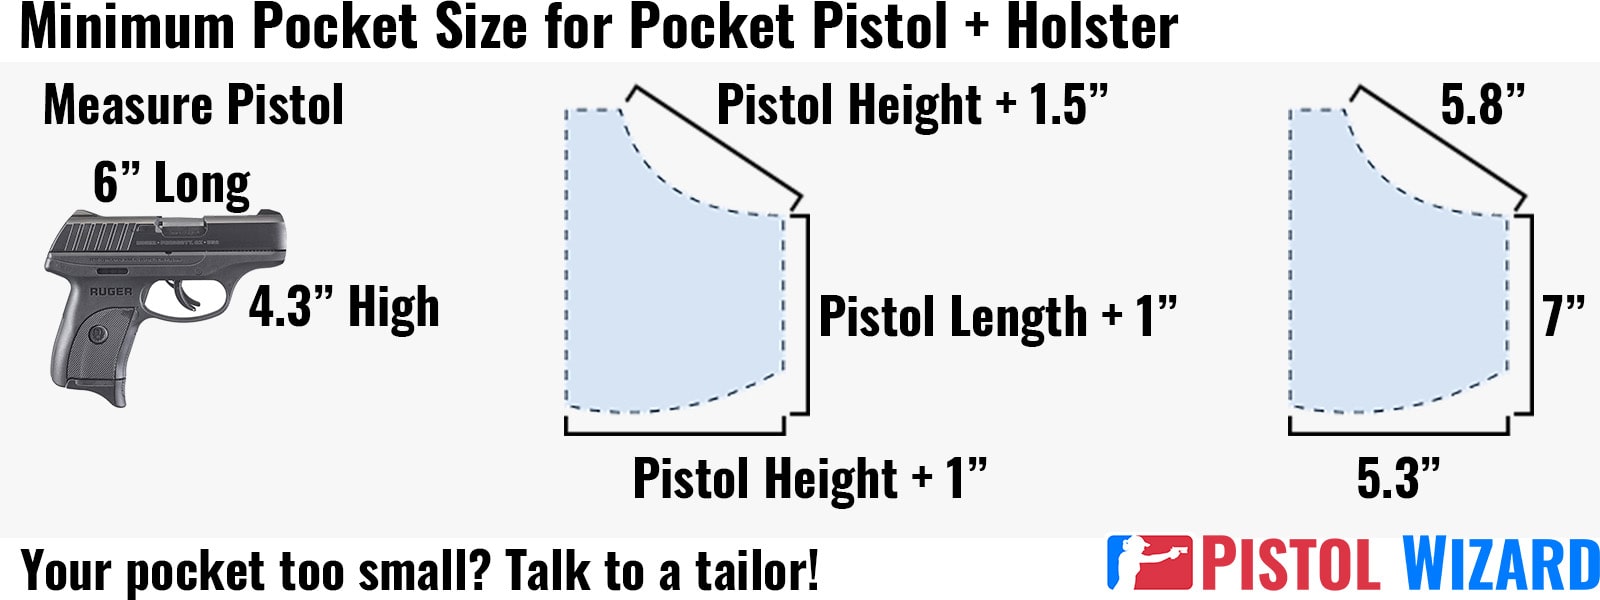 Minimum pocket size for pocket pistol and holster.